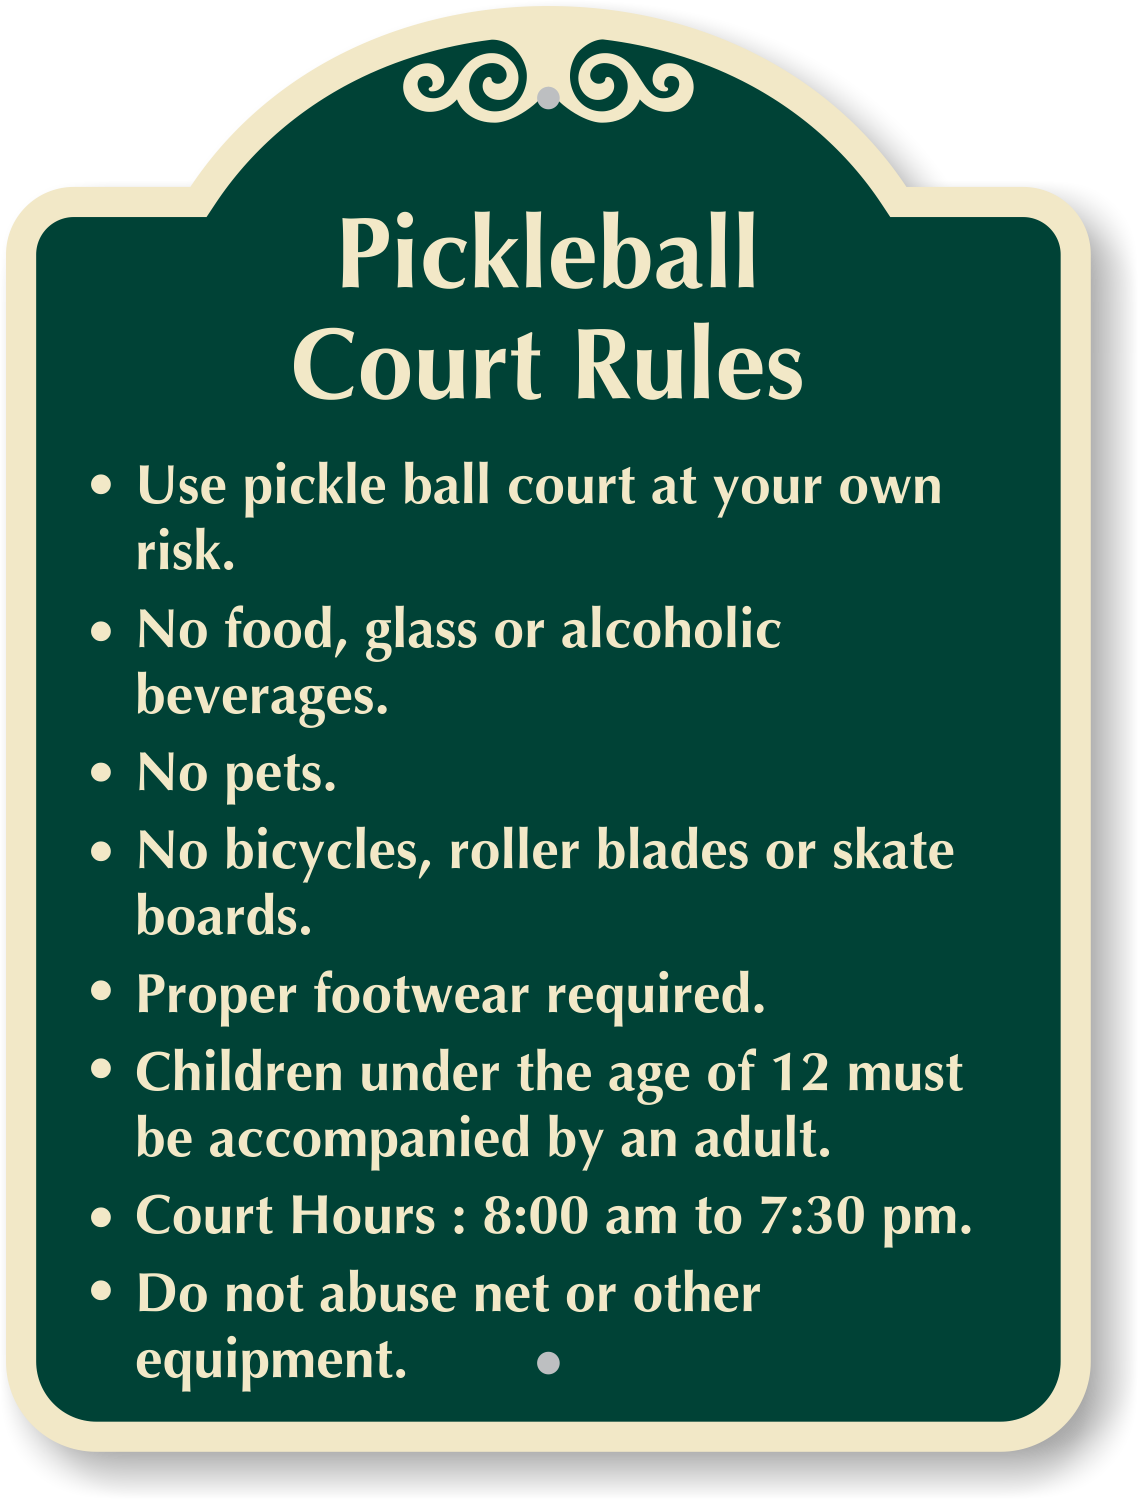 Pickleball Court Rules Sign prntbl concejomunicipaldechinu gov co